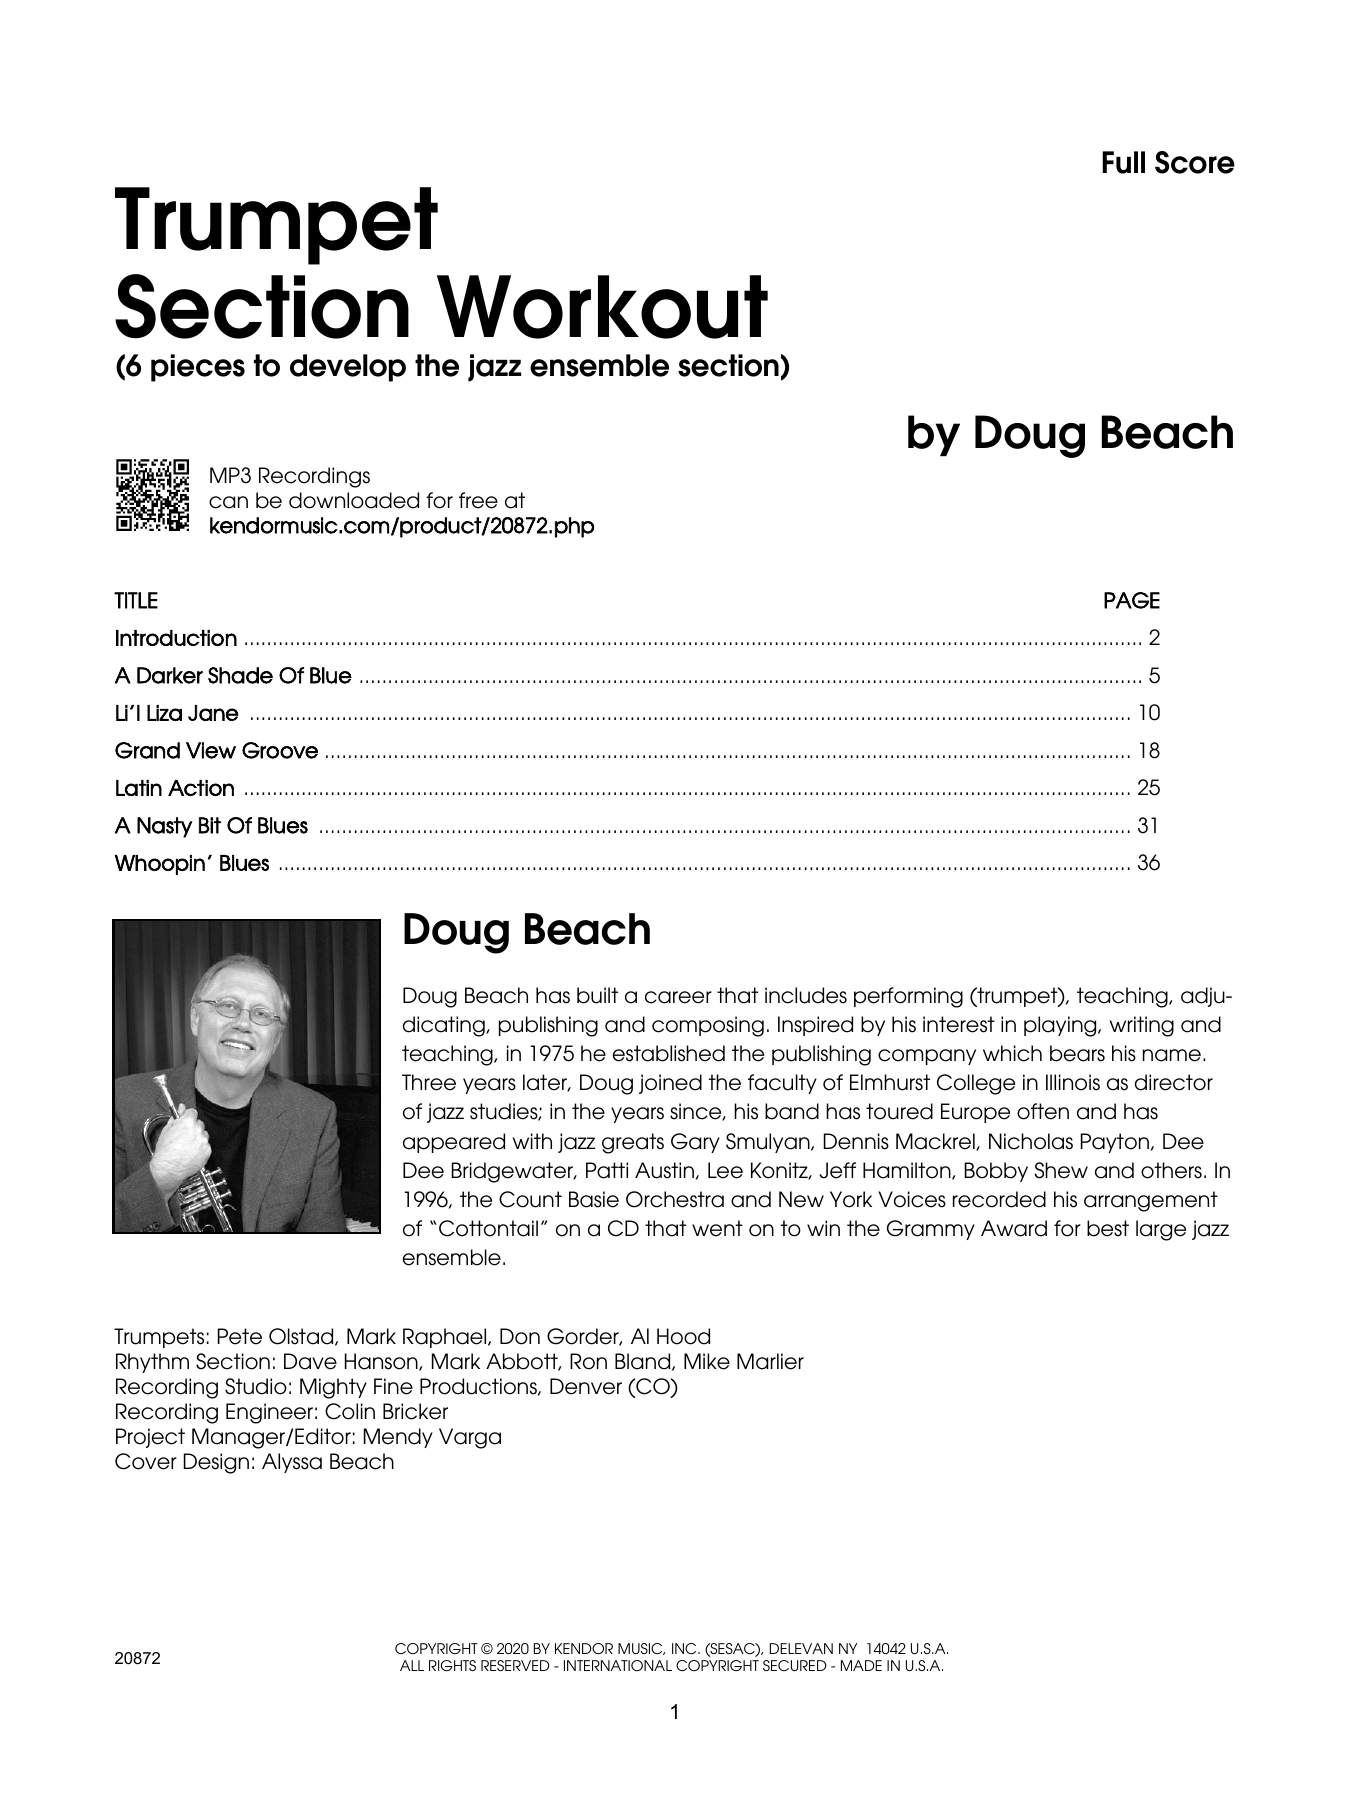 Trumpet Section Workout with MP3's (6 pieces to develop the jazz ensemble section) - Full Score (Brass Ensemble) von Doug Beach